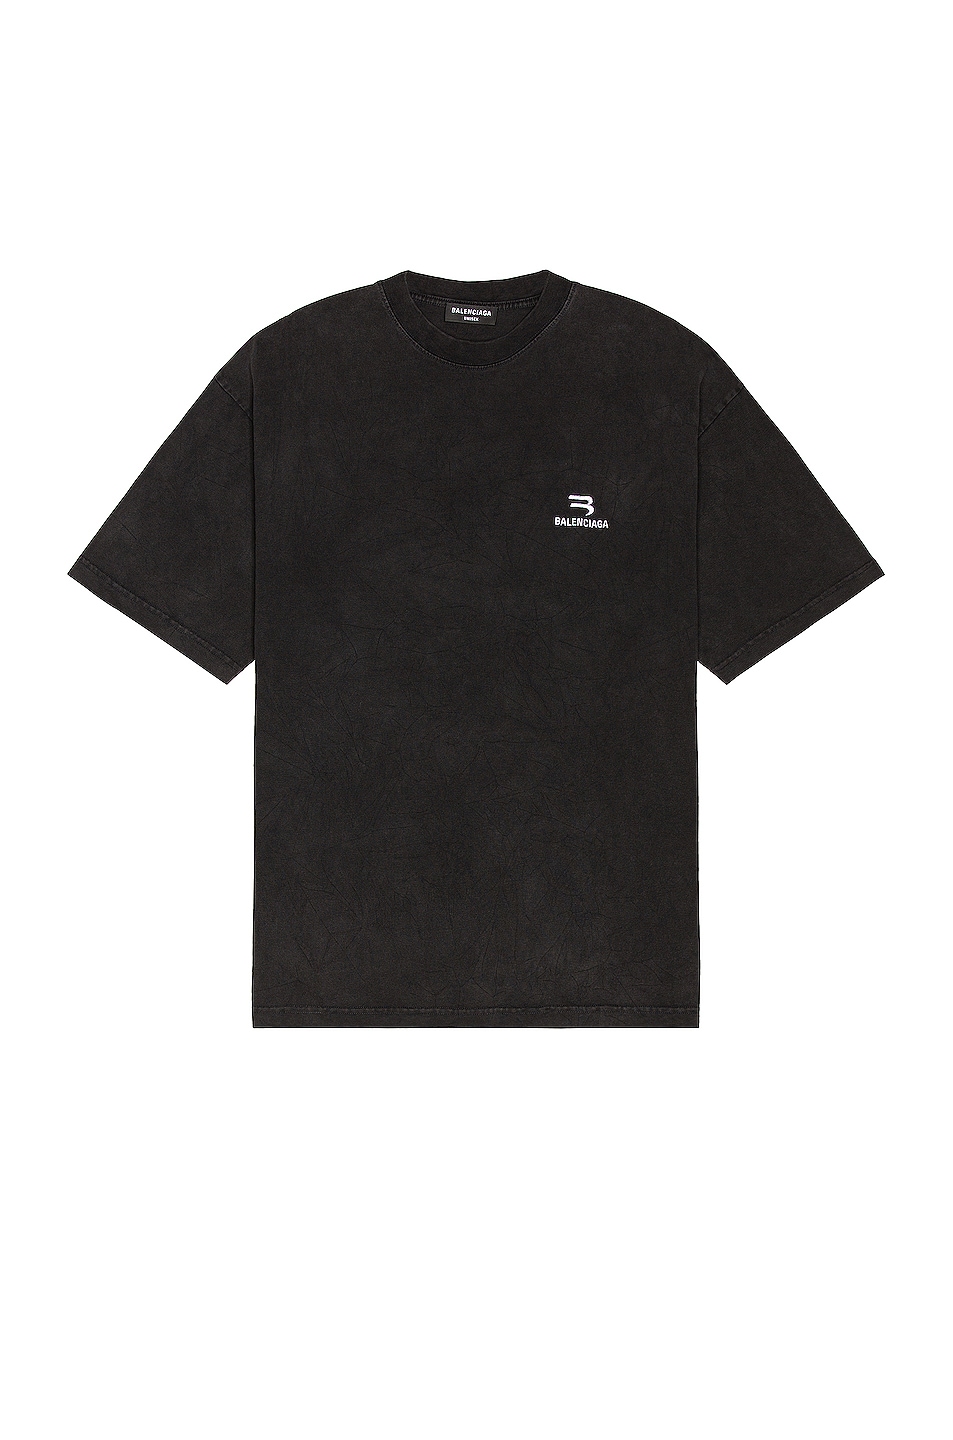 Image 1 of Balenciaga Medium Fit Sporty T-Shirt in Black & White